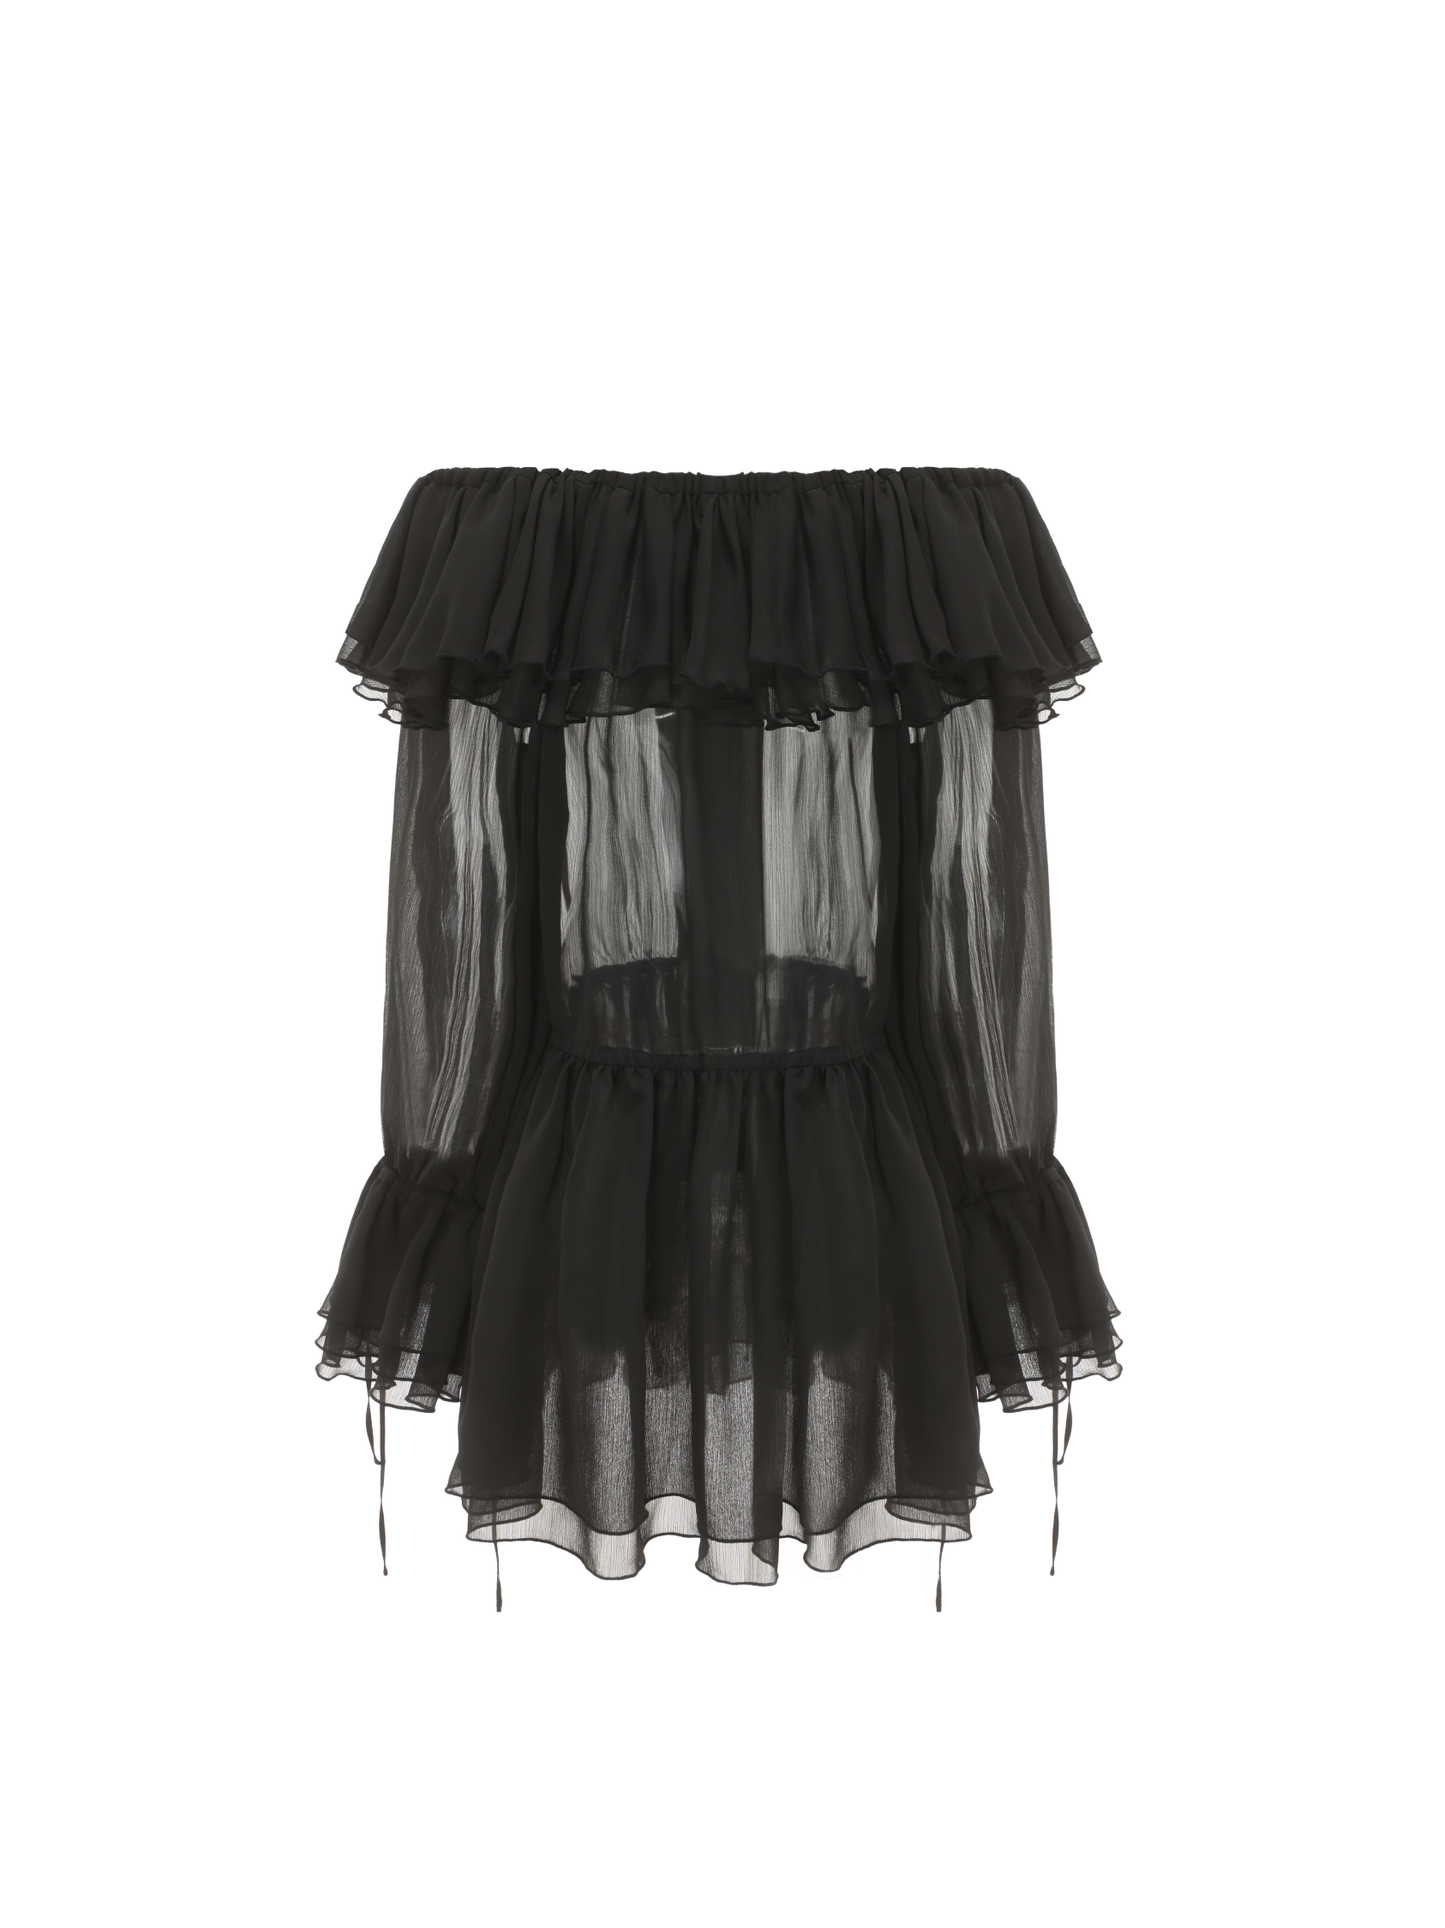 Anika Dress (Black) (Final Sale)